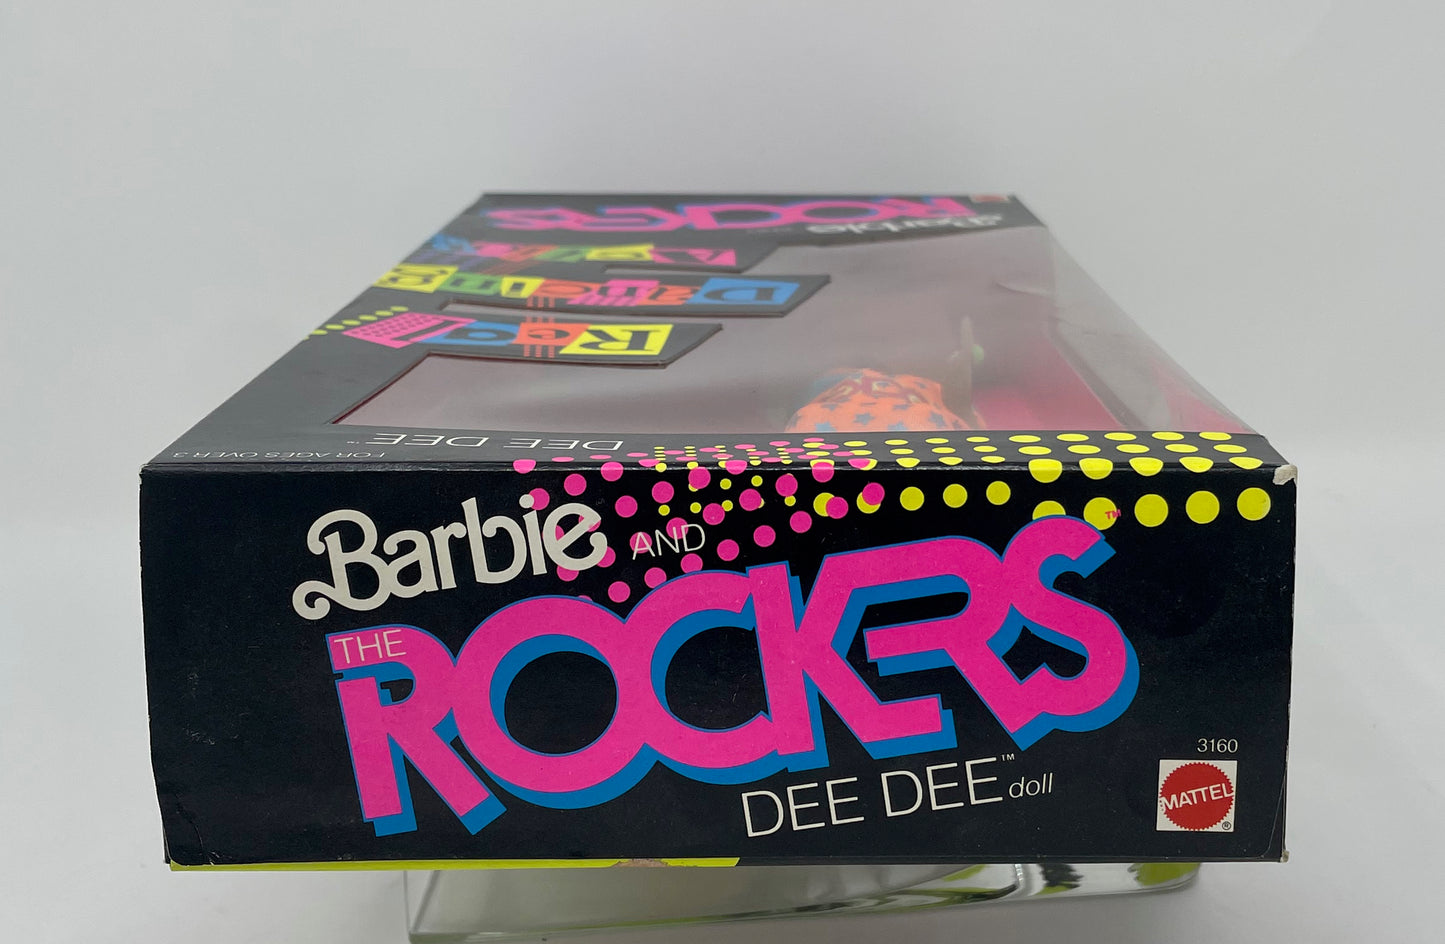 BARBIE AND THE ROCKERS - DEE DEE - REAL DANCING ACTION #3160 - MATTEL 1986